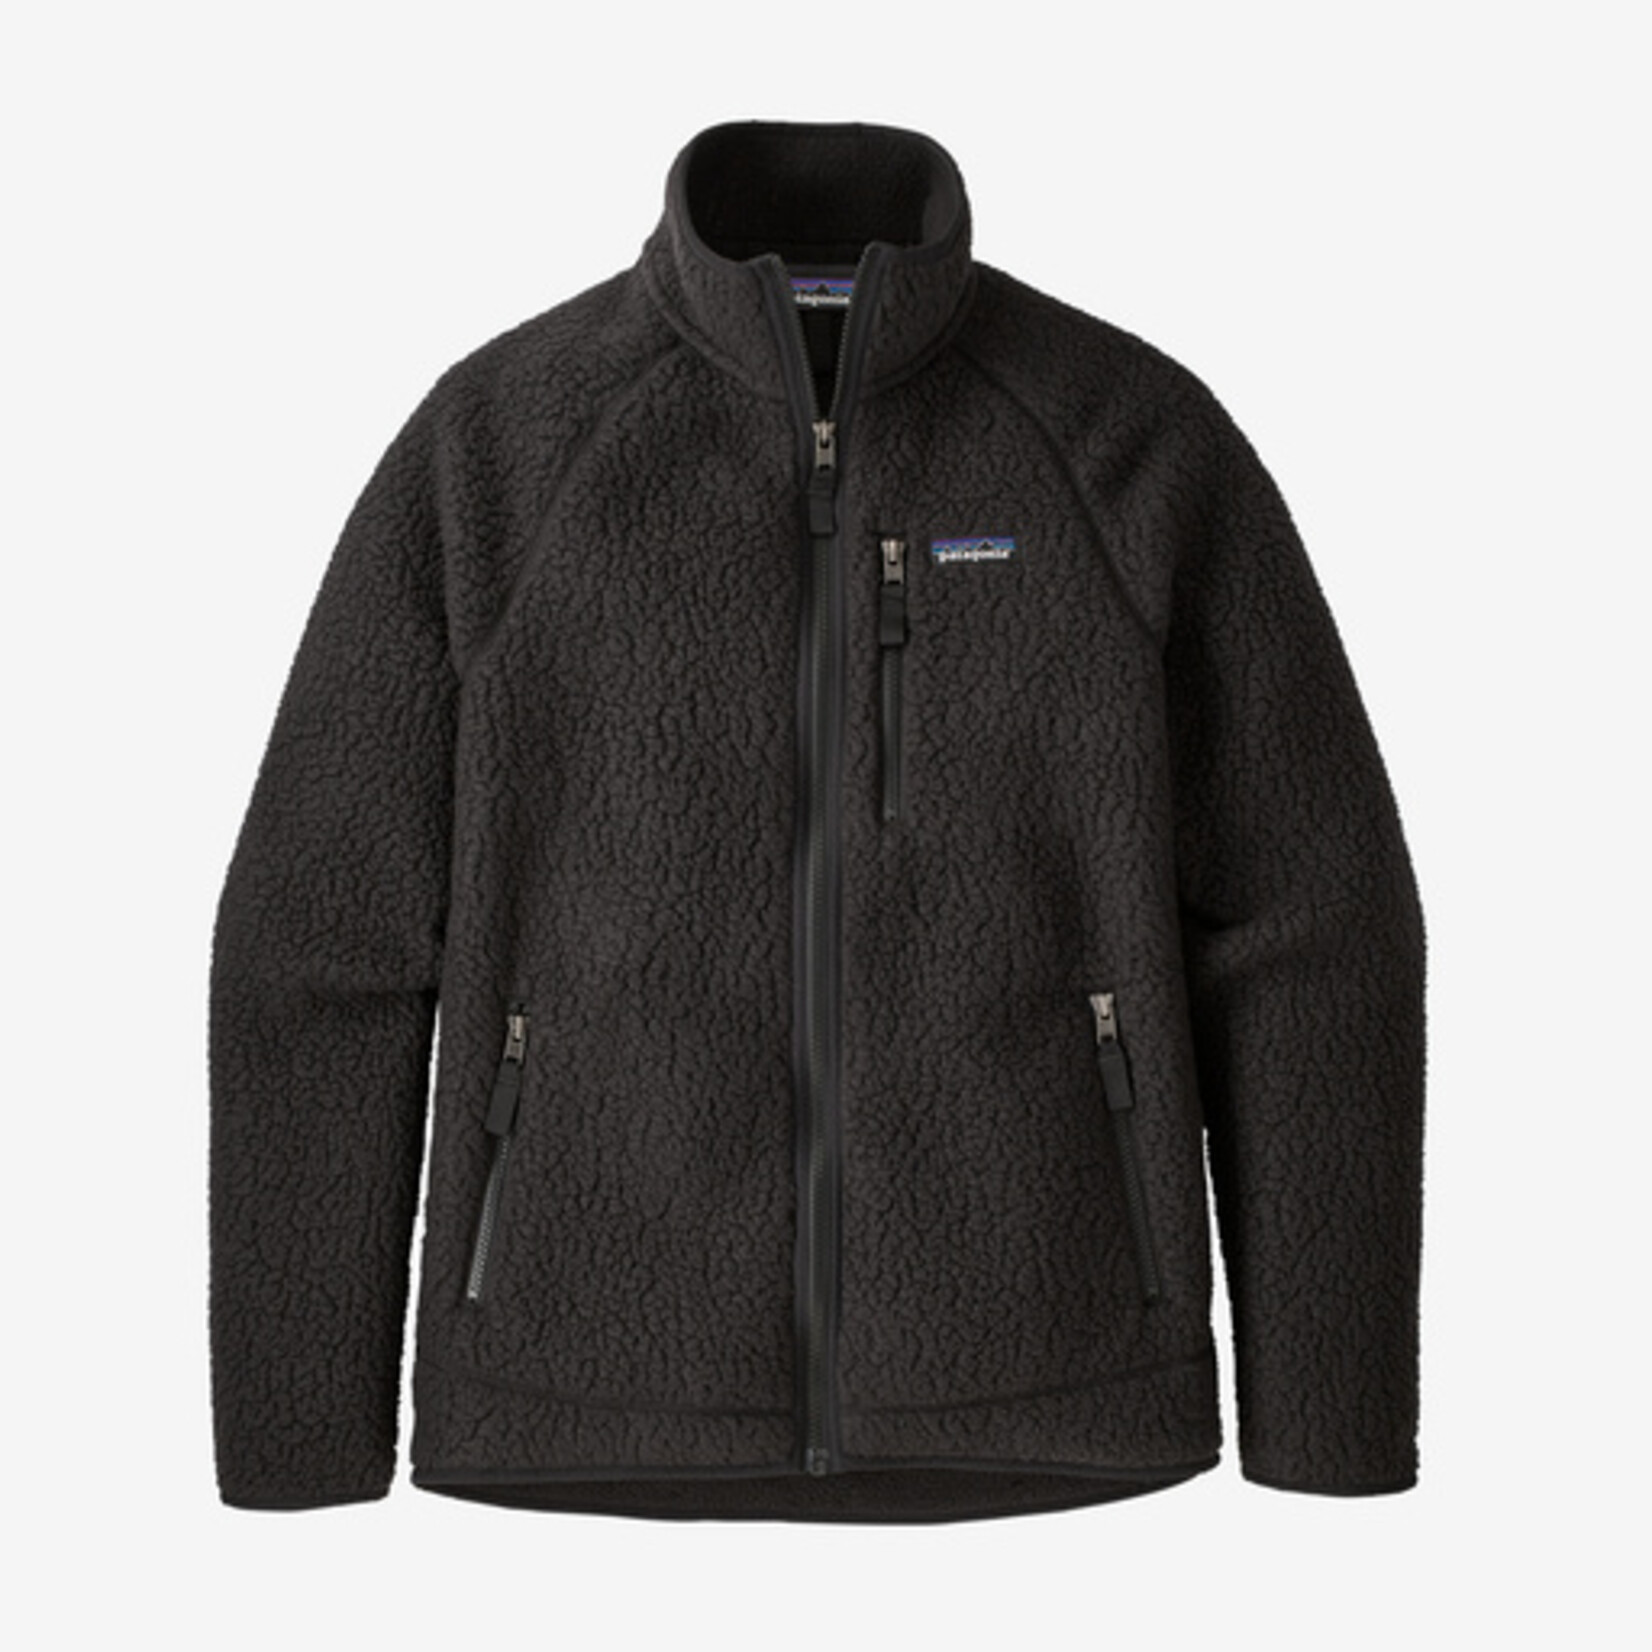 Patagonia M’s retro pile jacket